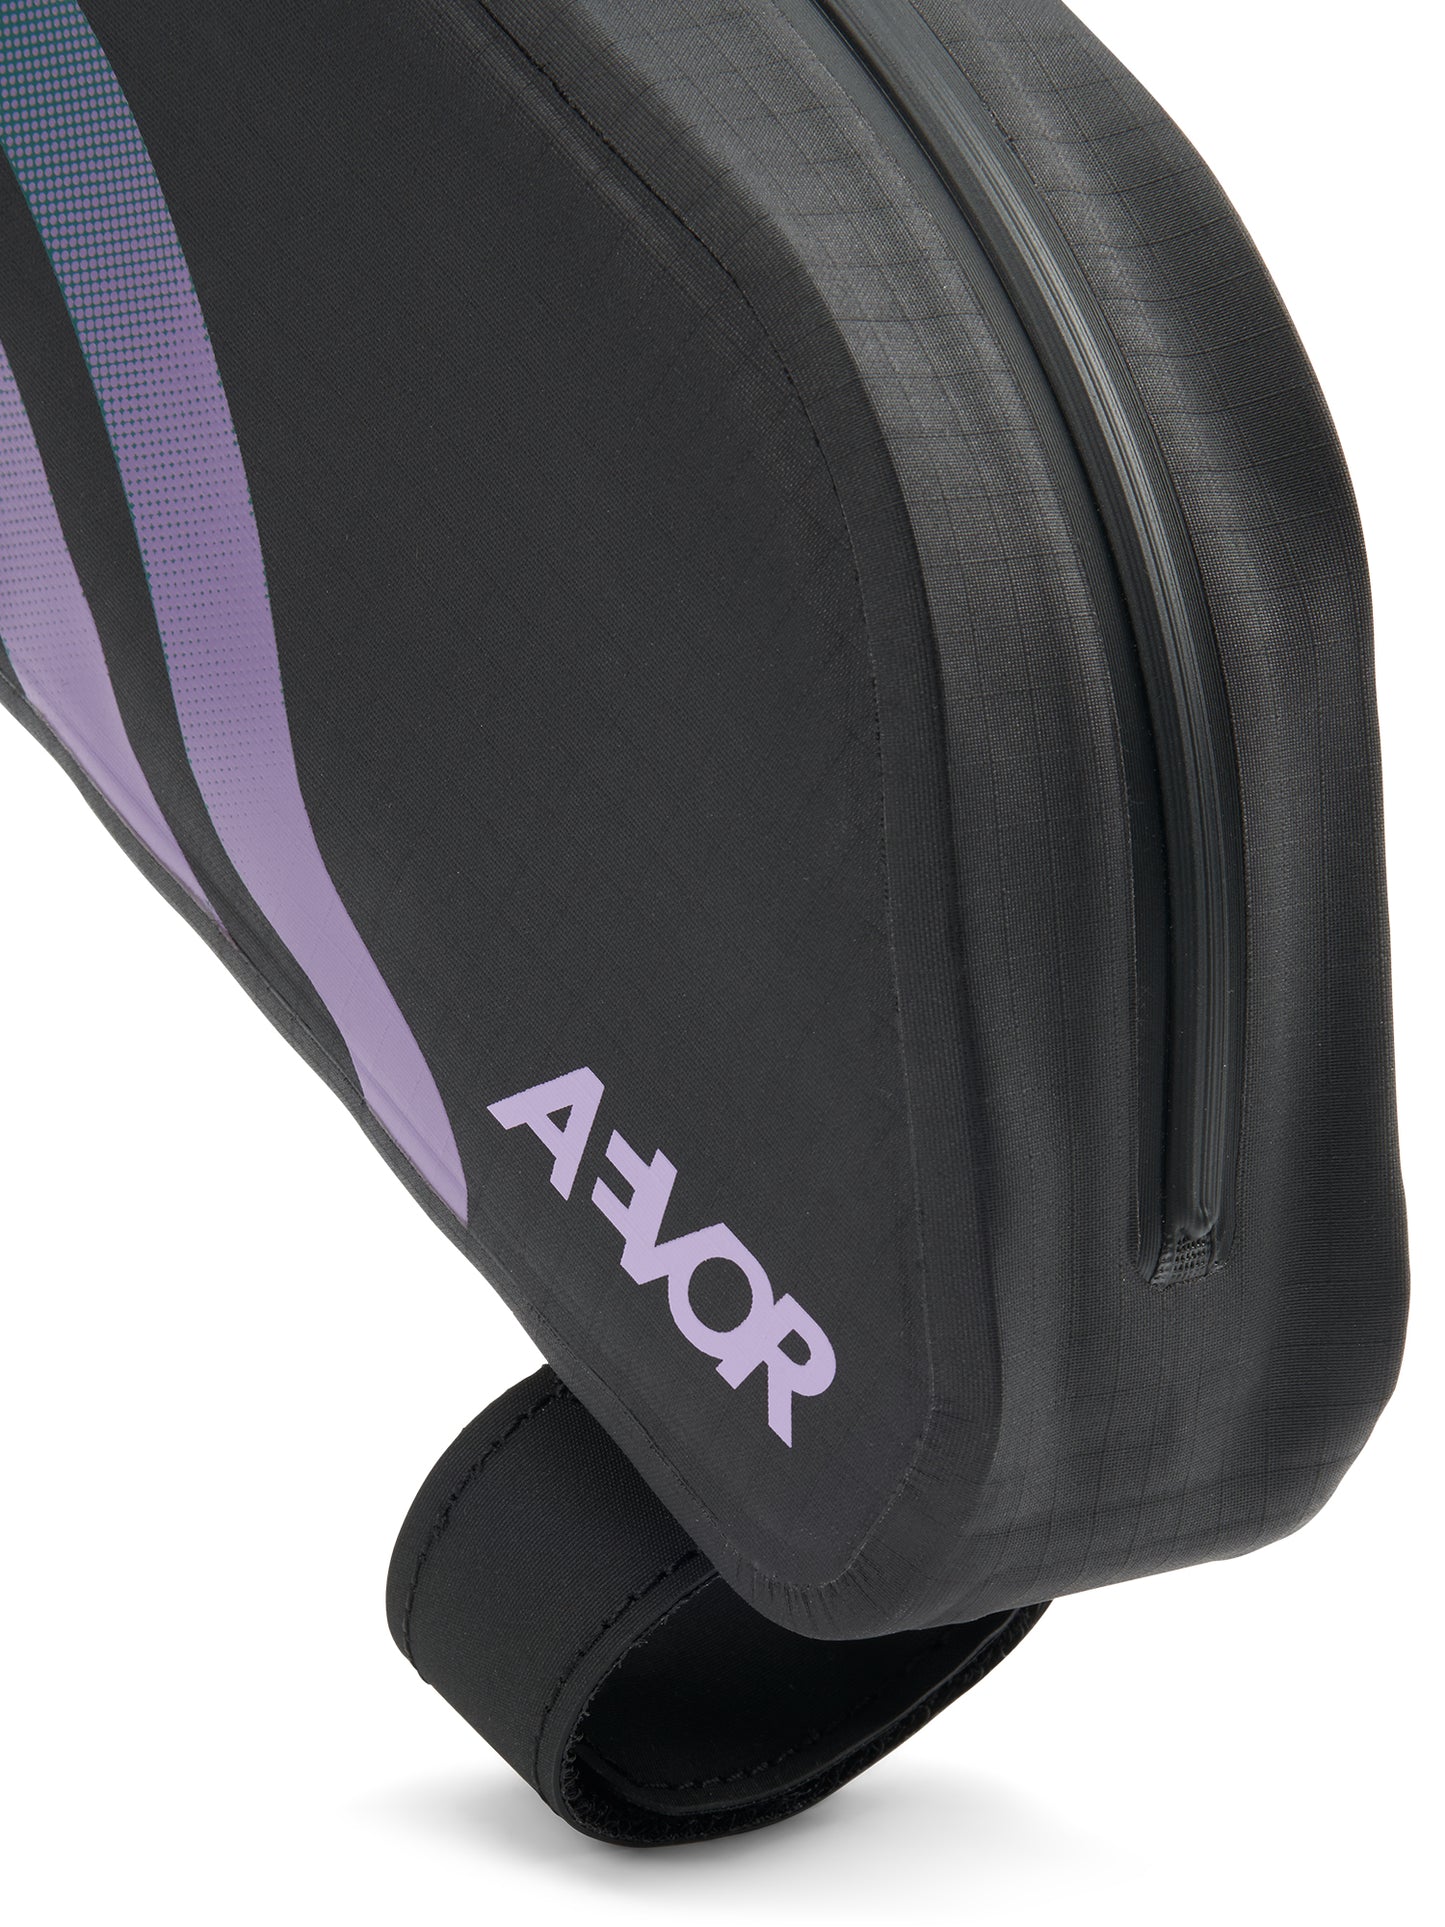 AEVOR-Top-Tube-Pack-Road-Proof-Nightrider-details